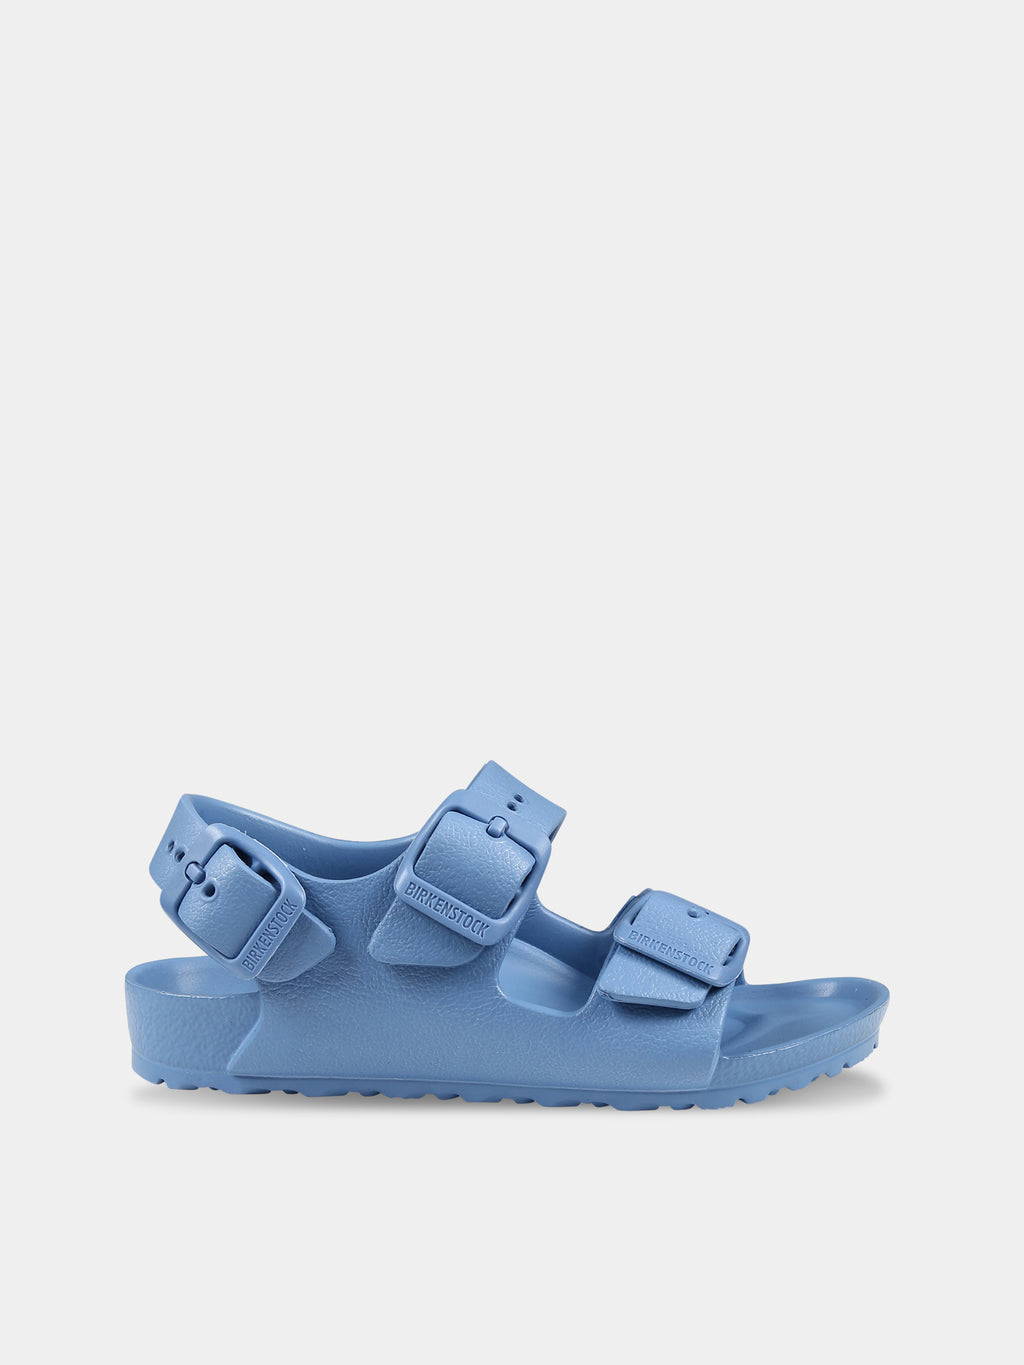 Milano Eva light blue sandals for kids with logo